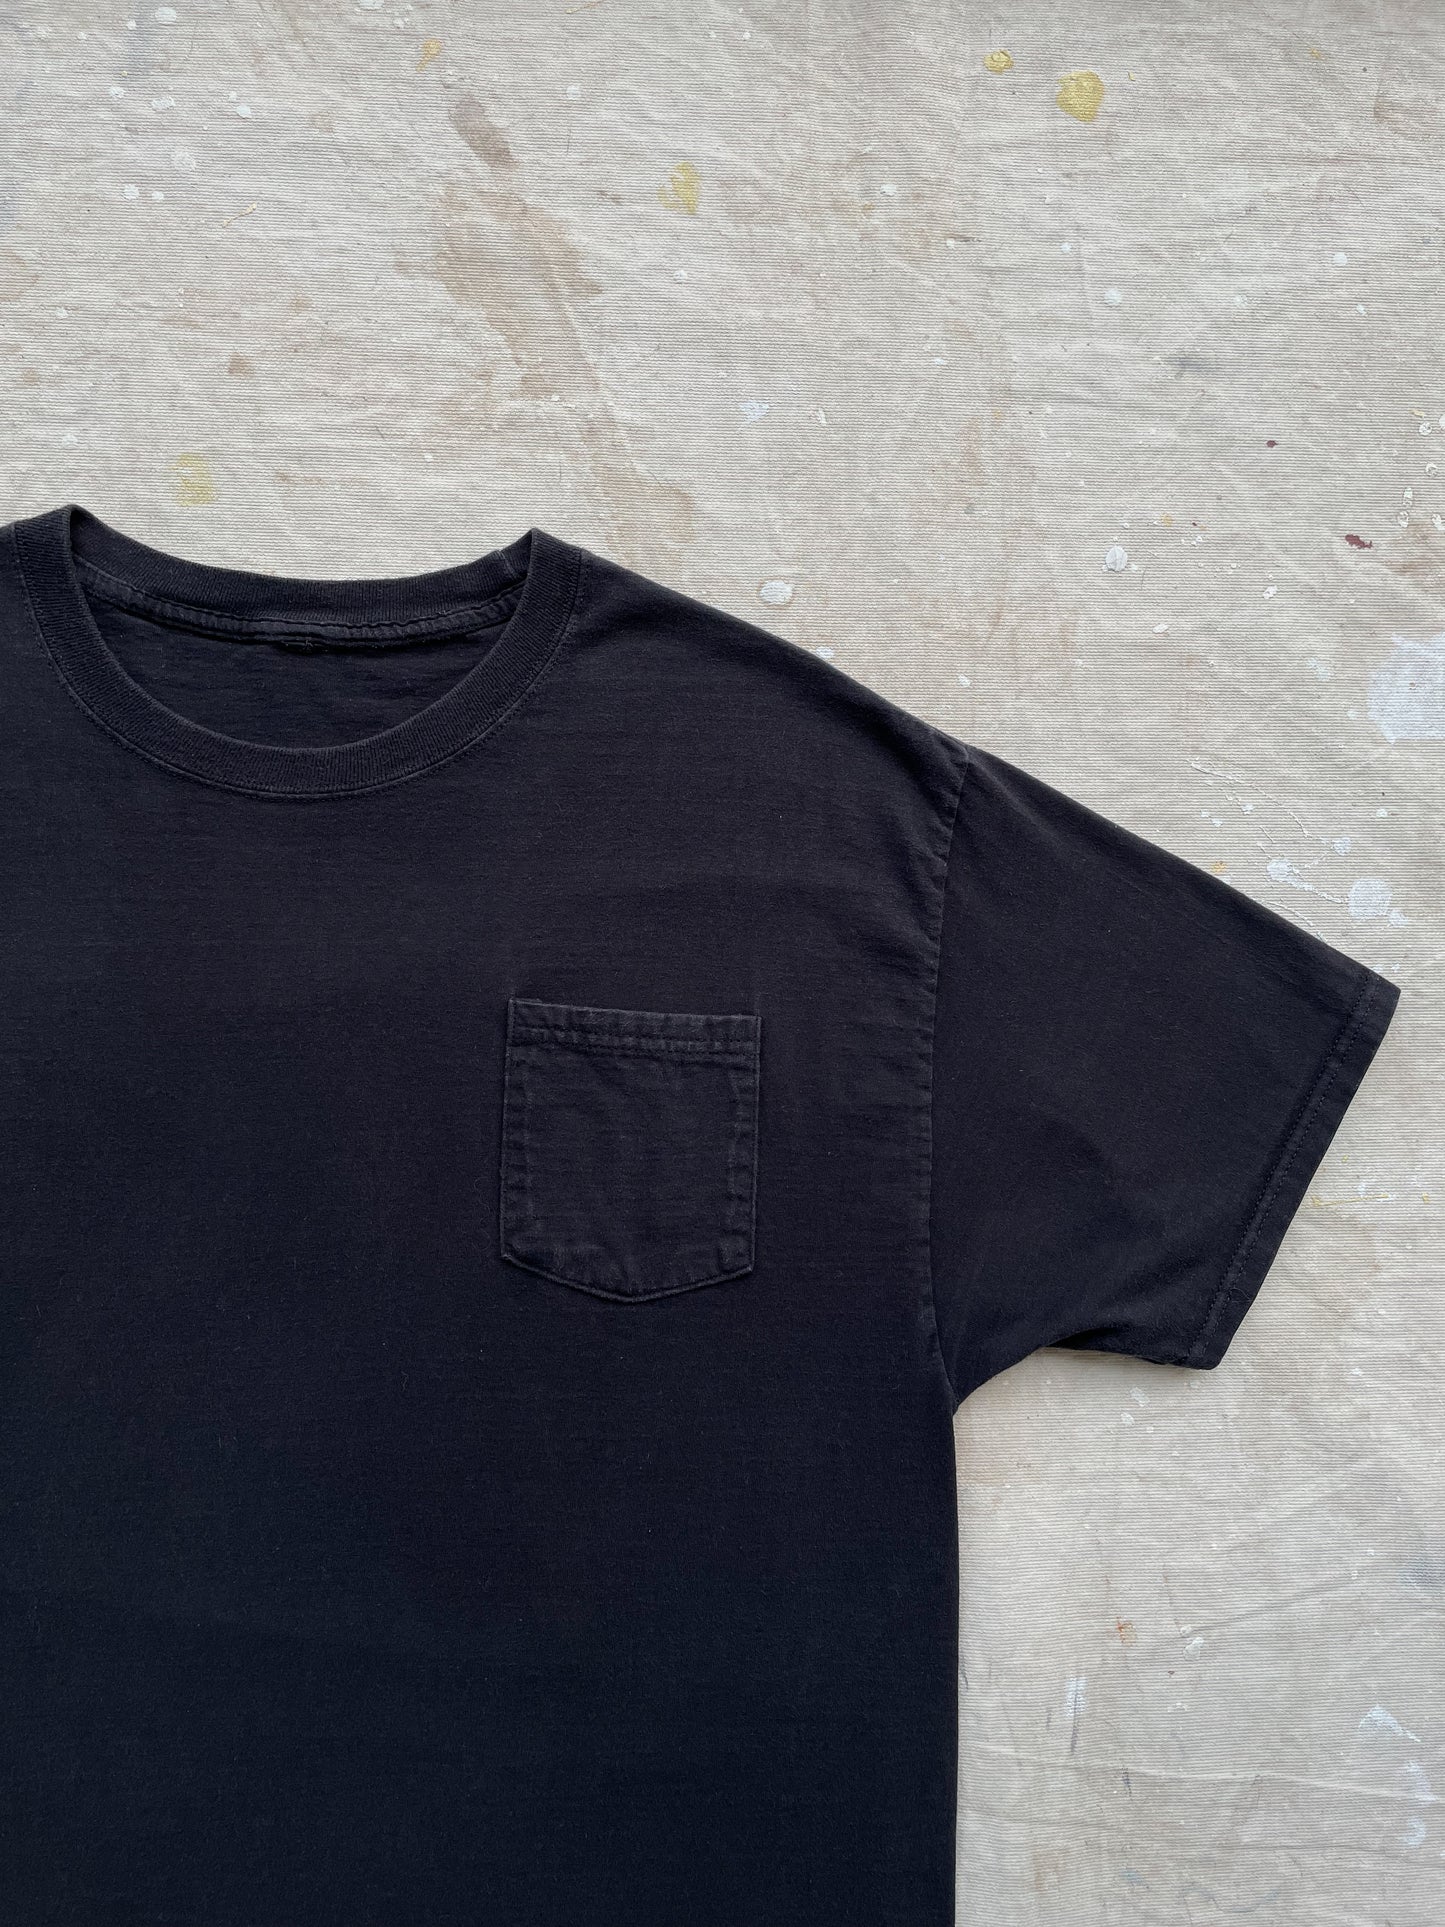 Blank Black Pocket T-Shirt—[M]